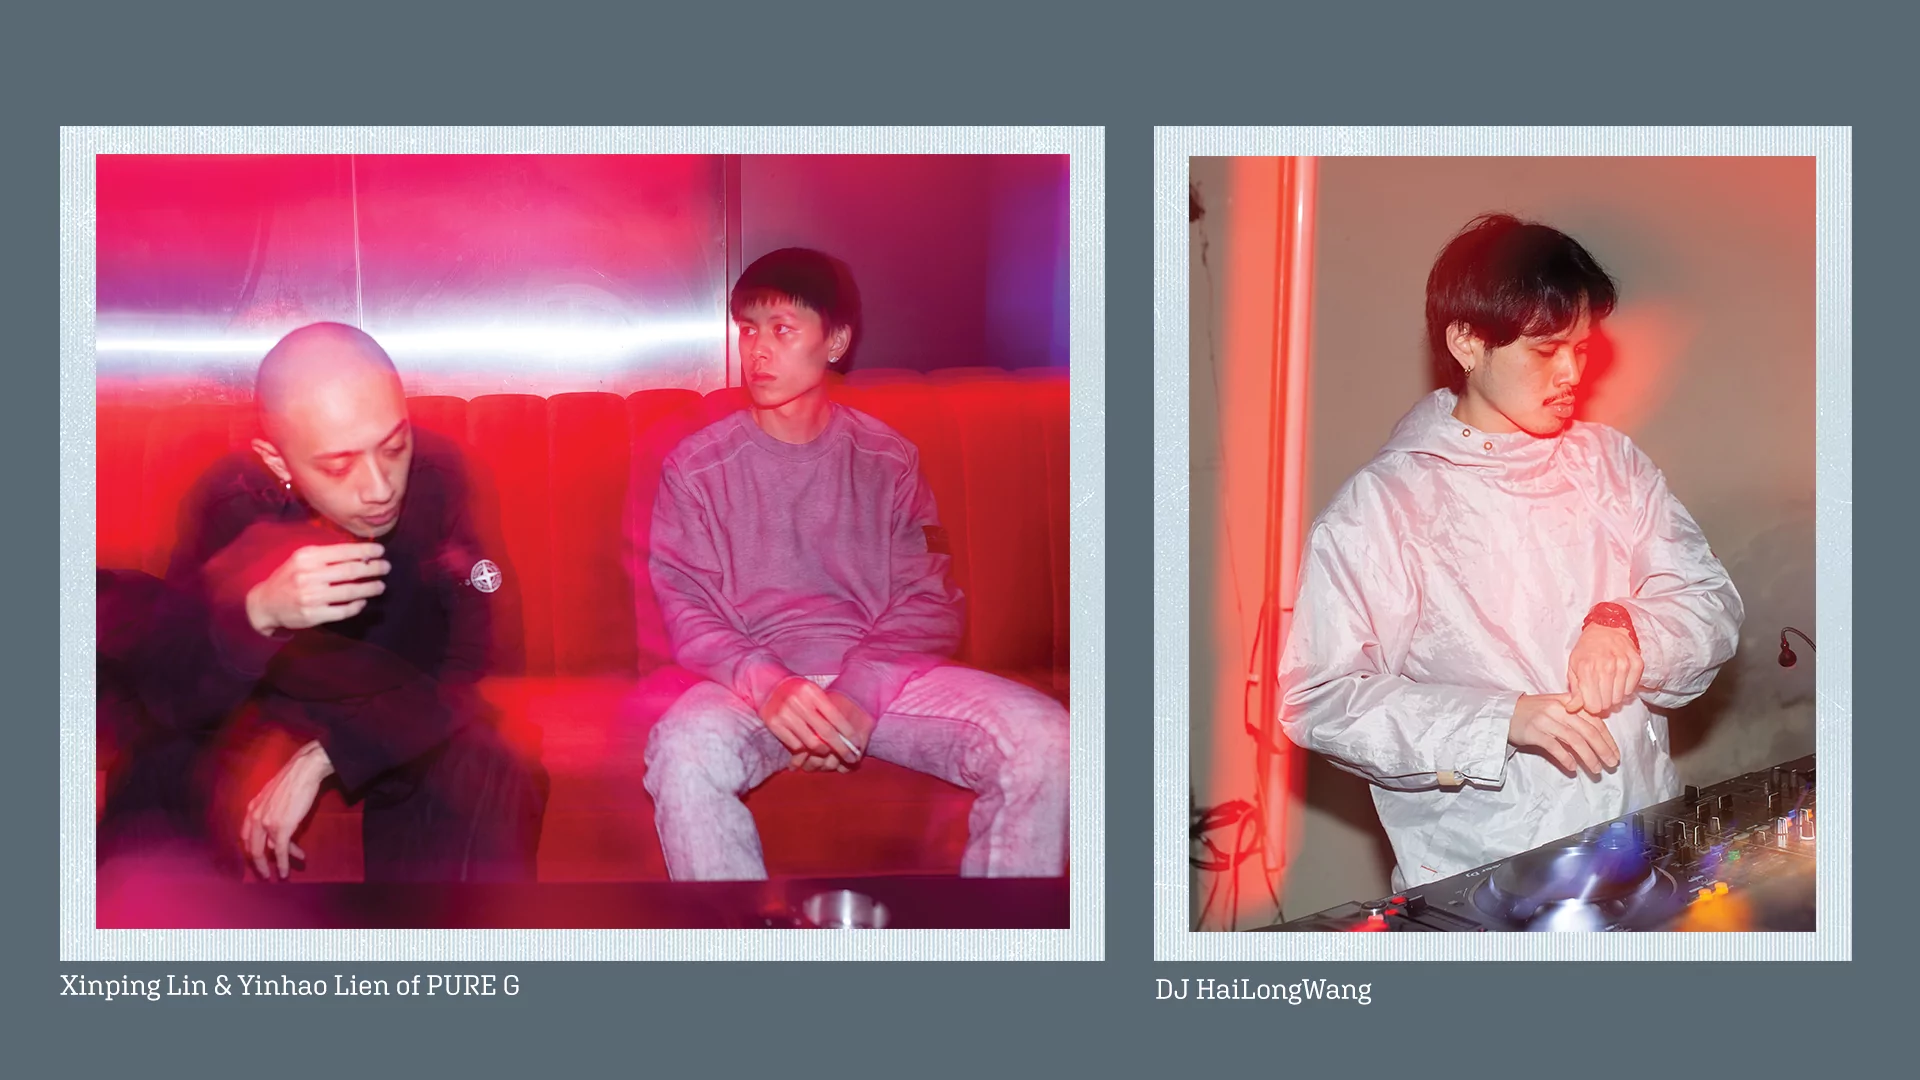 L- R: PURE G's Xinping Lin and Yinhao Lien sat on a bench in a club. DJ HaiLongWang DJing